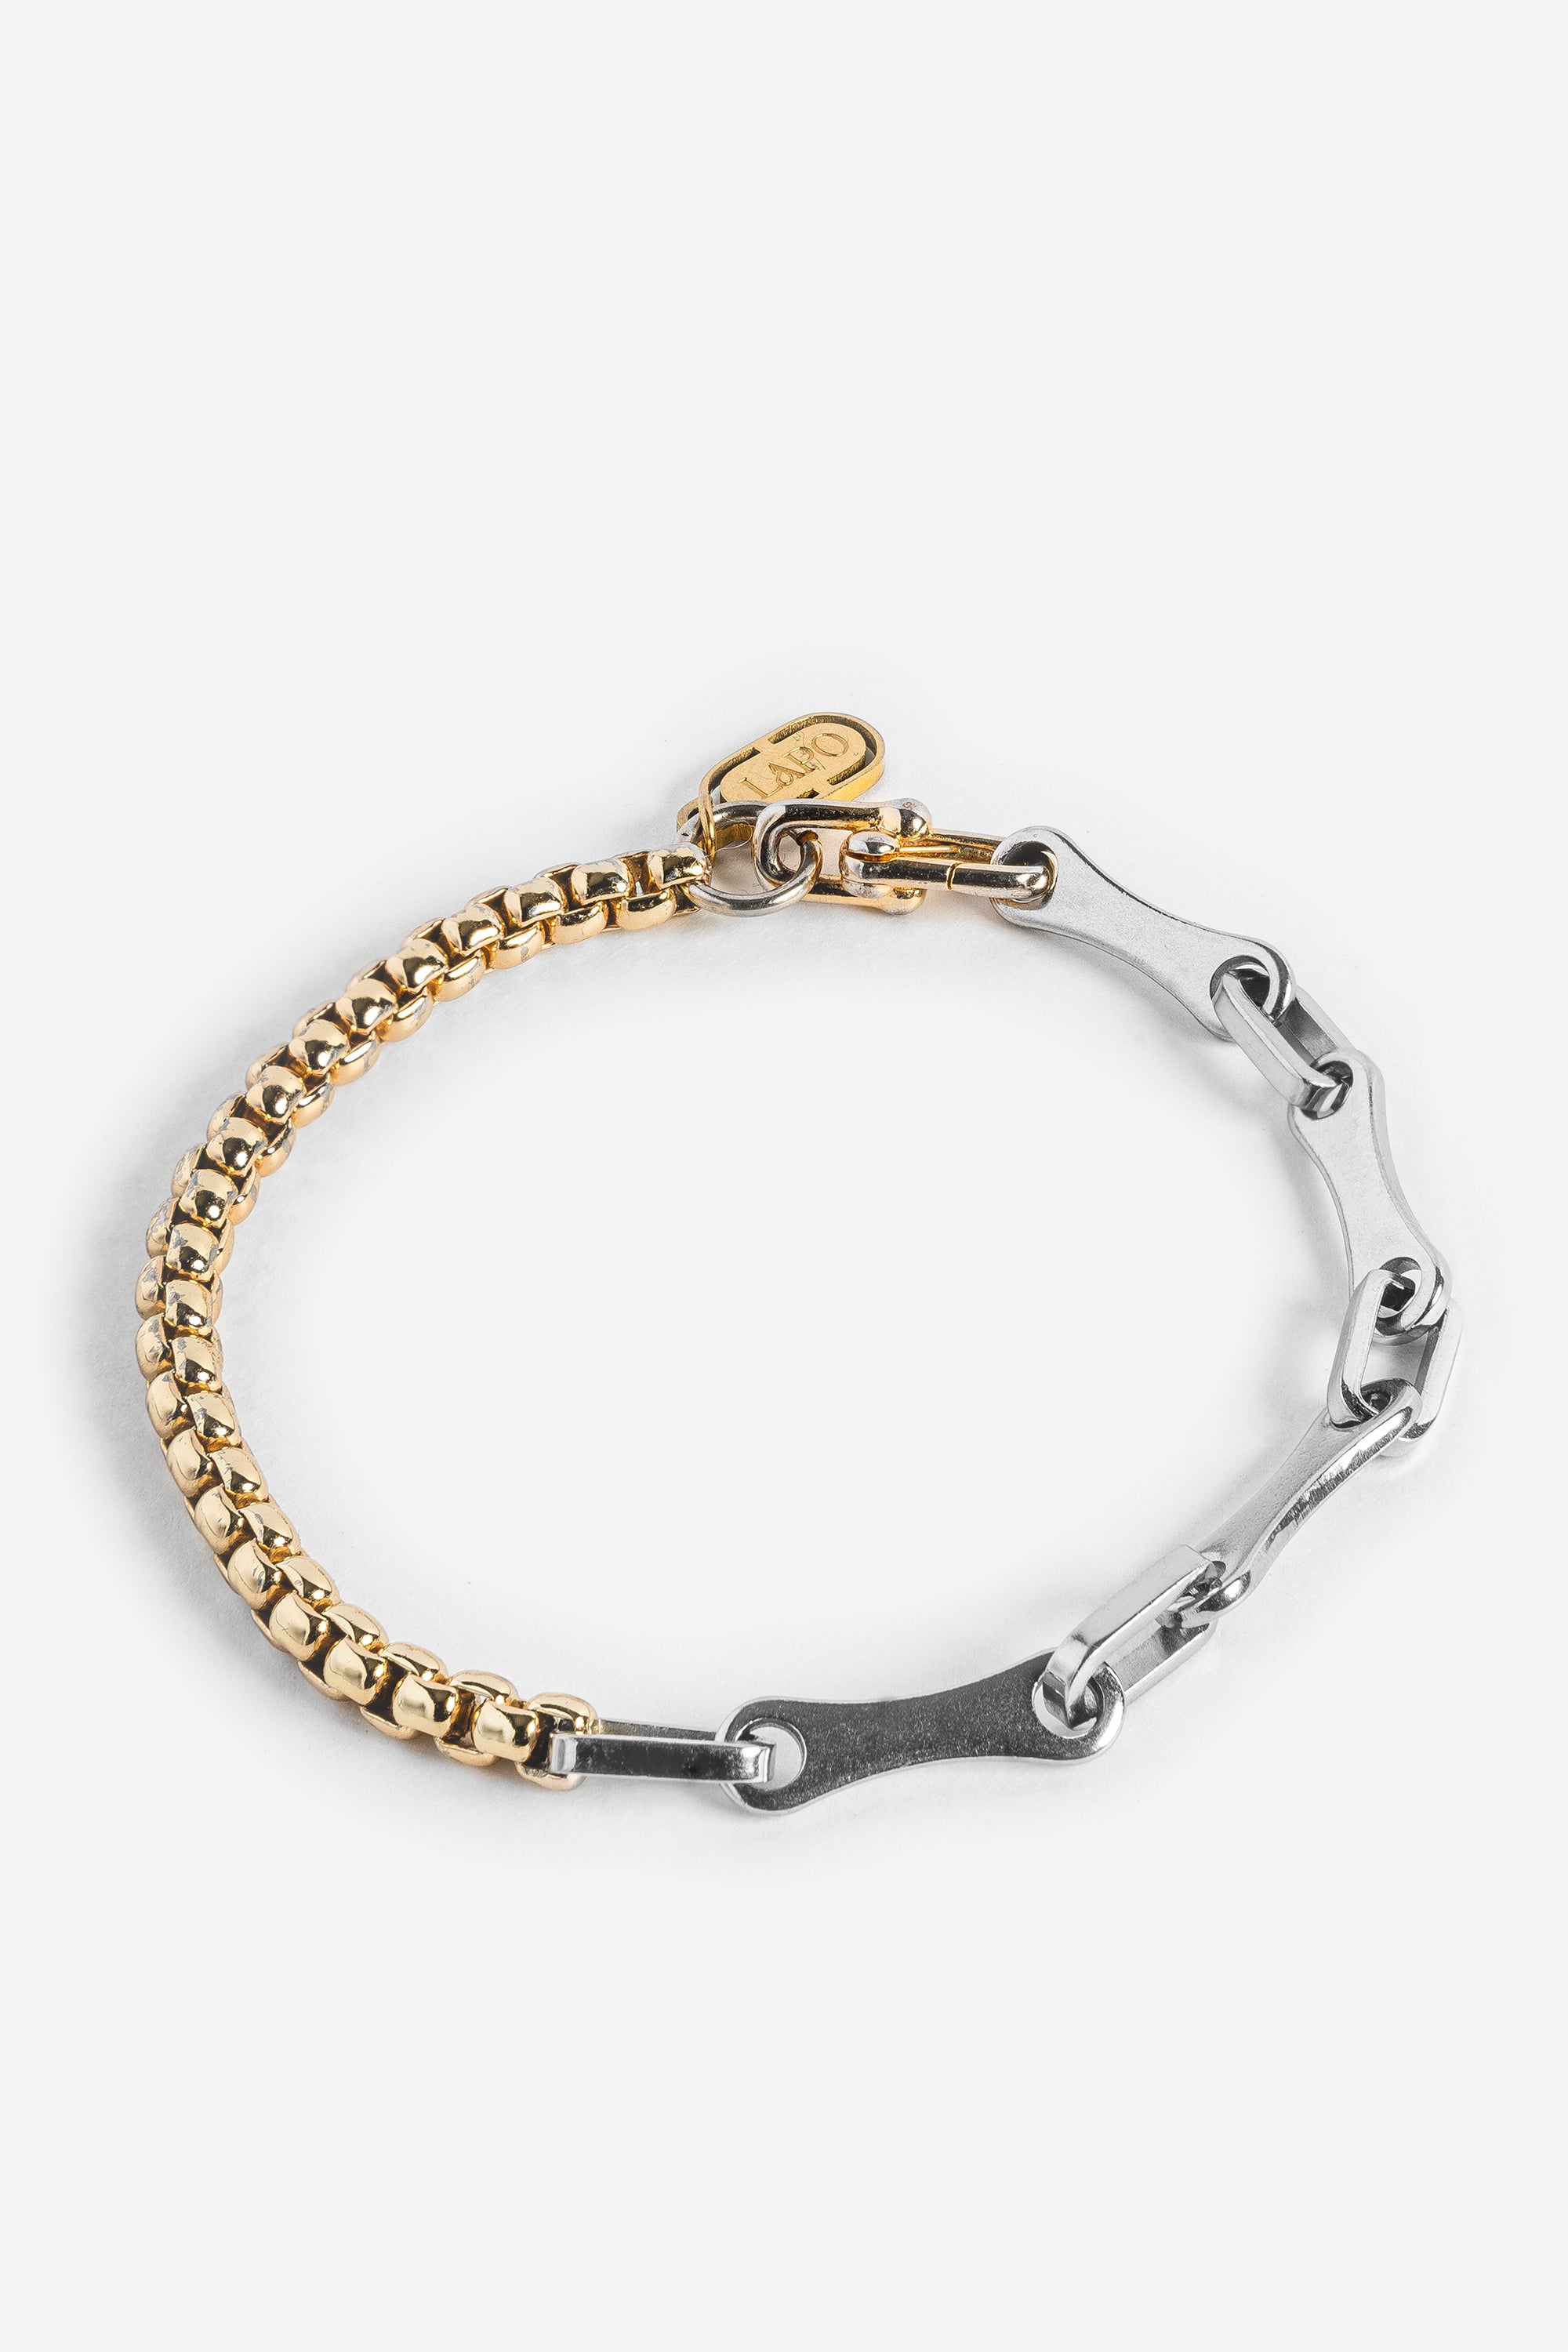 Zara Silver & Gold Bracelet